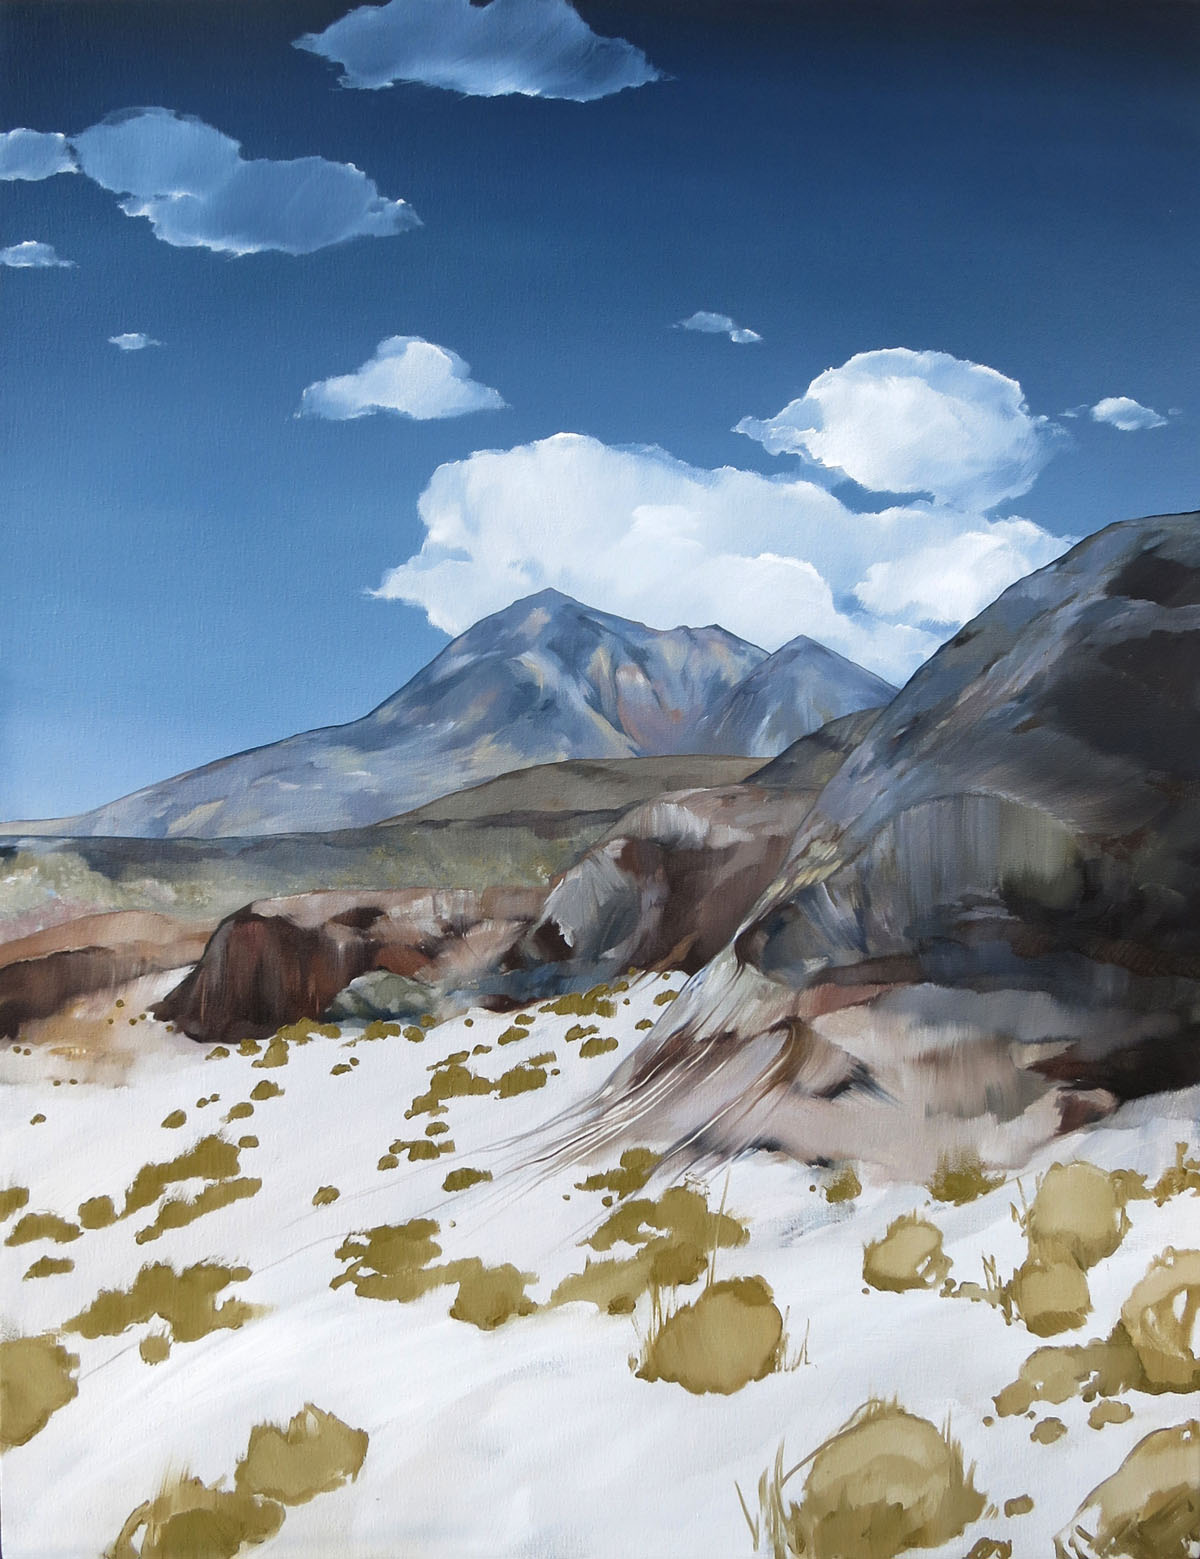 Atacama no.2, 2016 | Oil painting on canvas | 1010 x 760mm